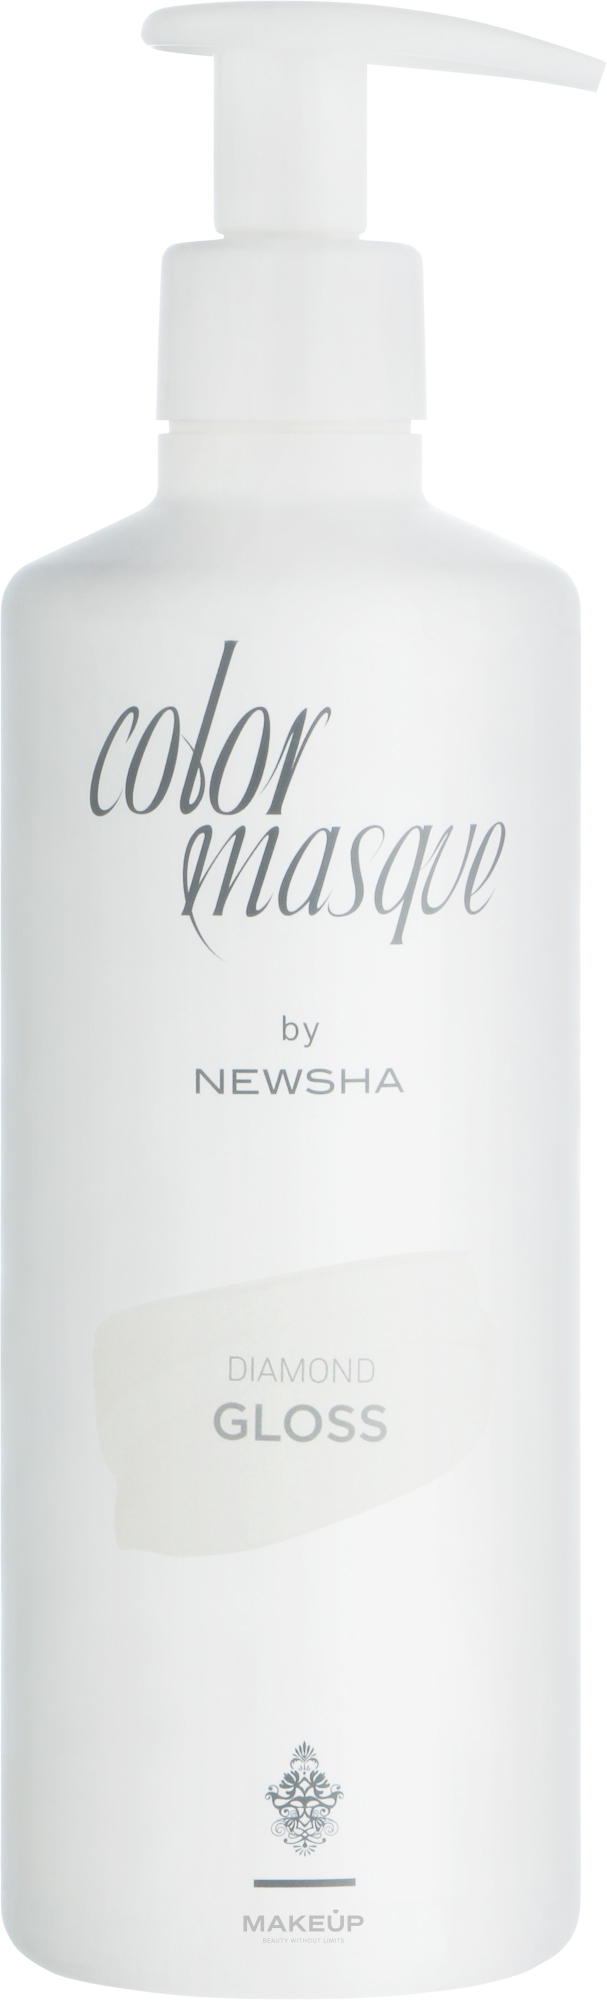 Цветная маска для волос - Newsha Color Masque Diamond Gloss — фото 500ml